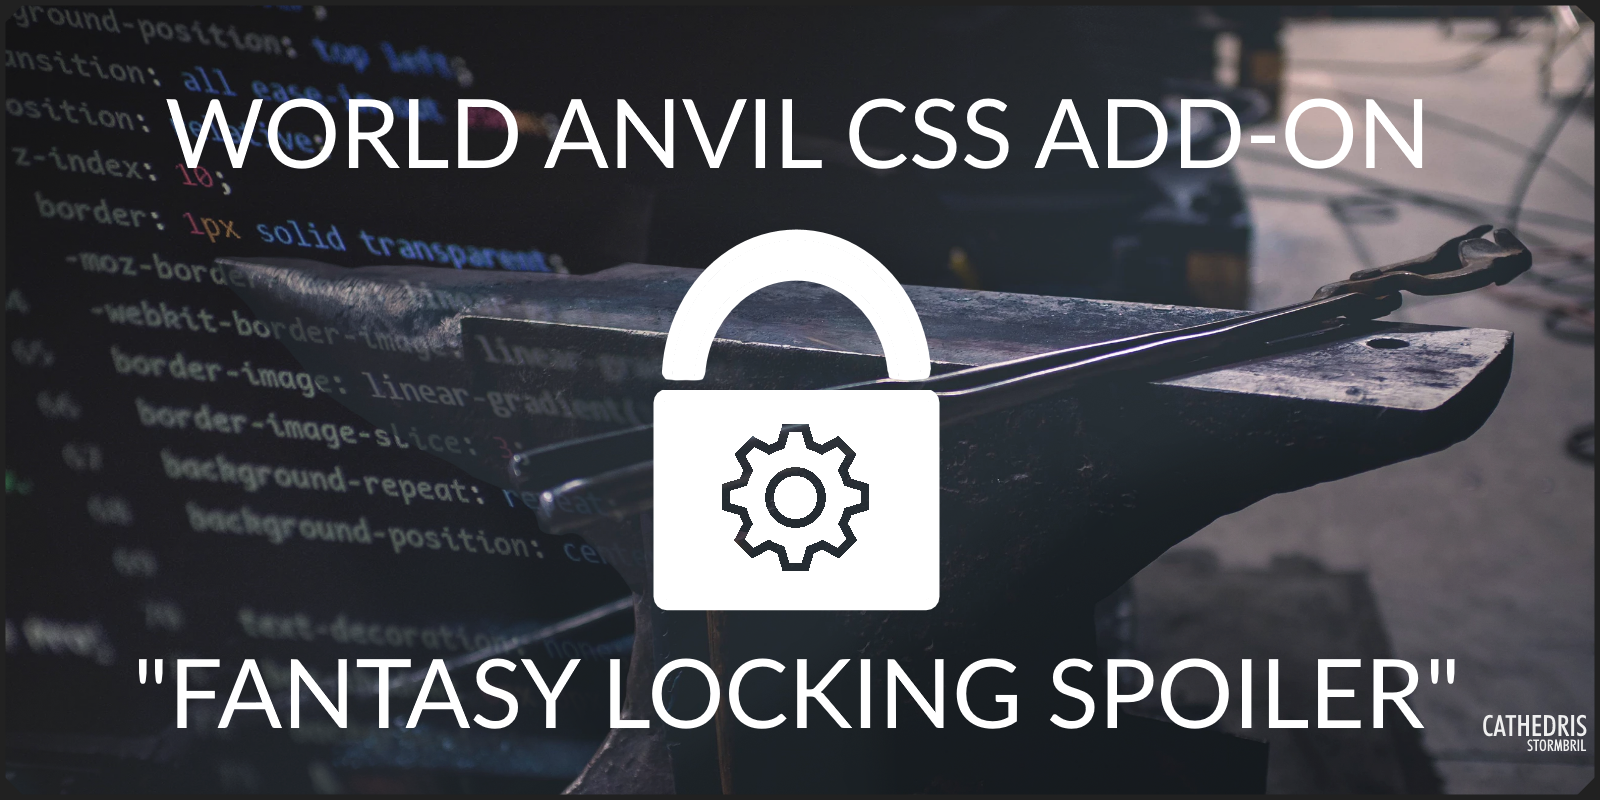 World Anvil CSS add-on: Fantasy Locking Spoiler